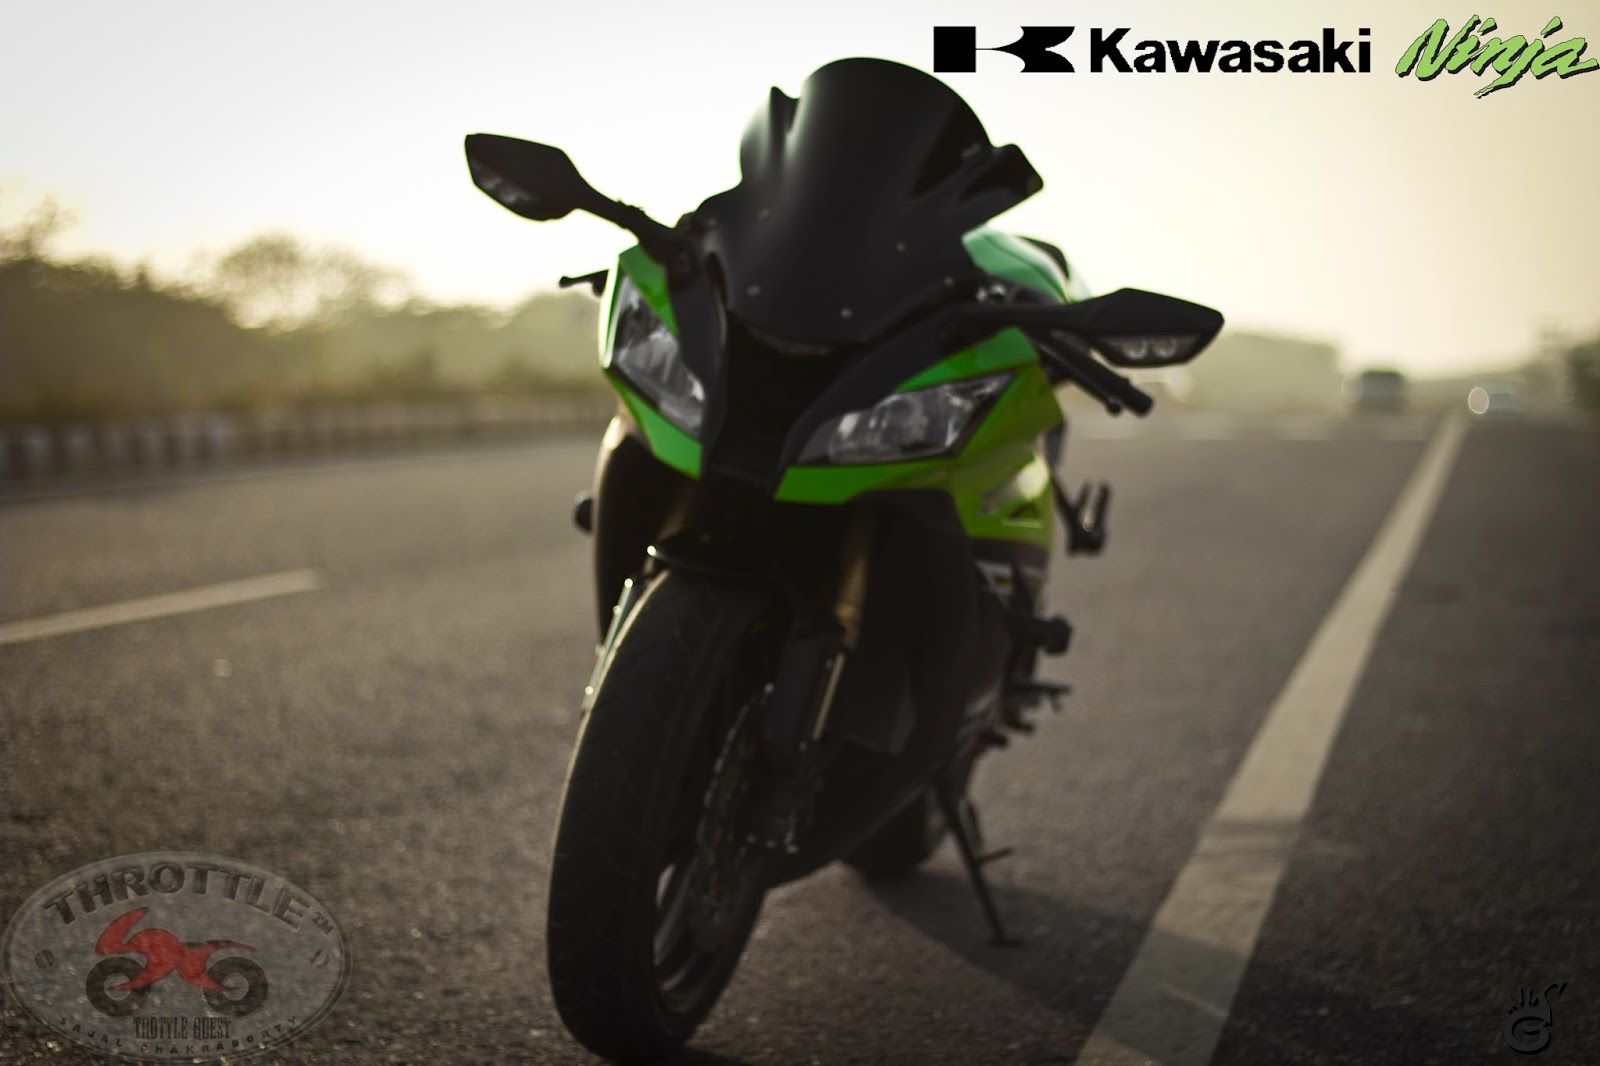 Analítico Automático Cintura 2014 Kawasaki Ninja ZX-10R - Ride Review - ThrottleQuest